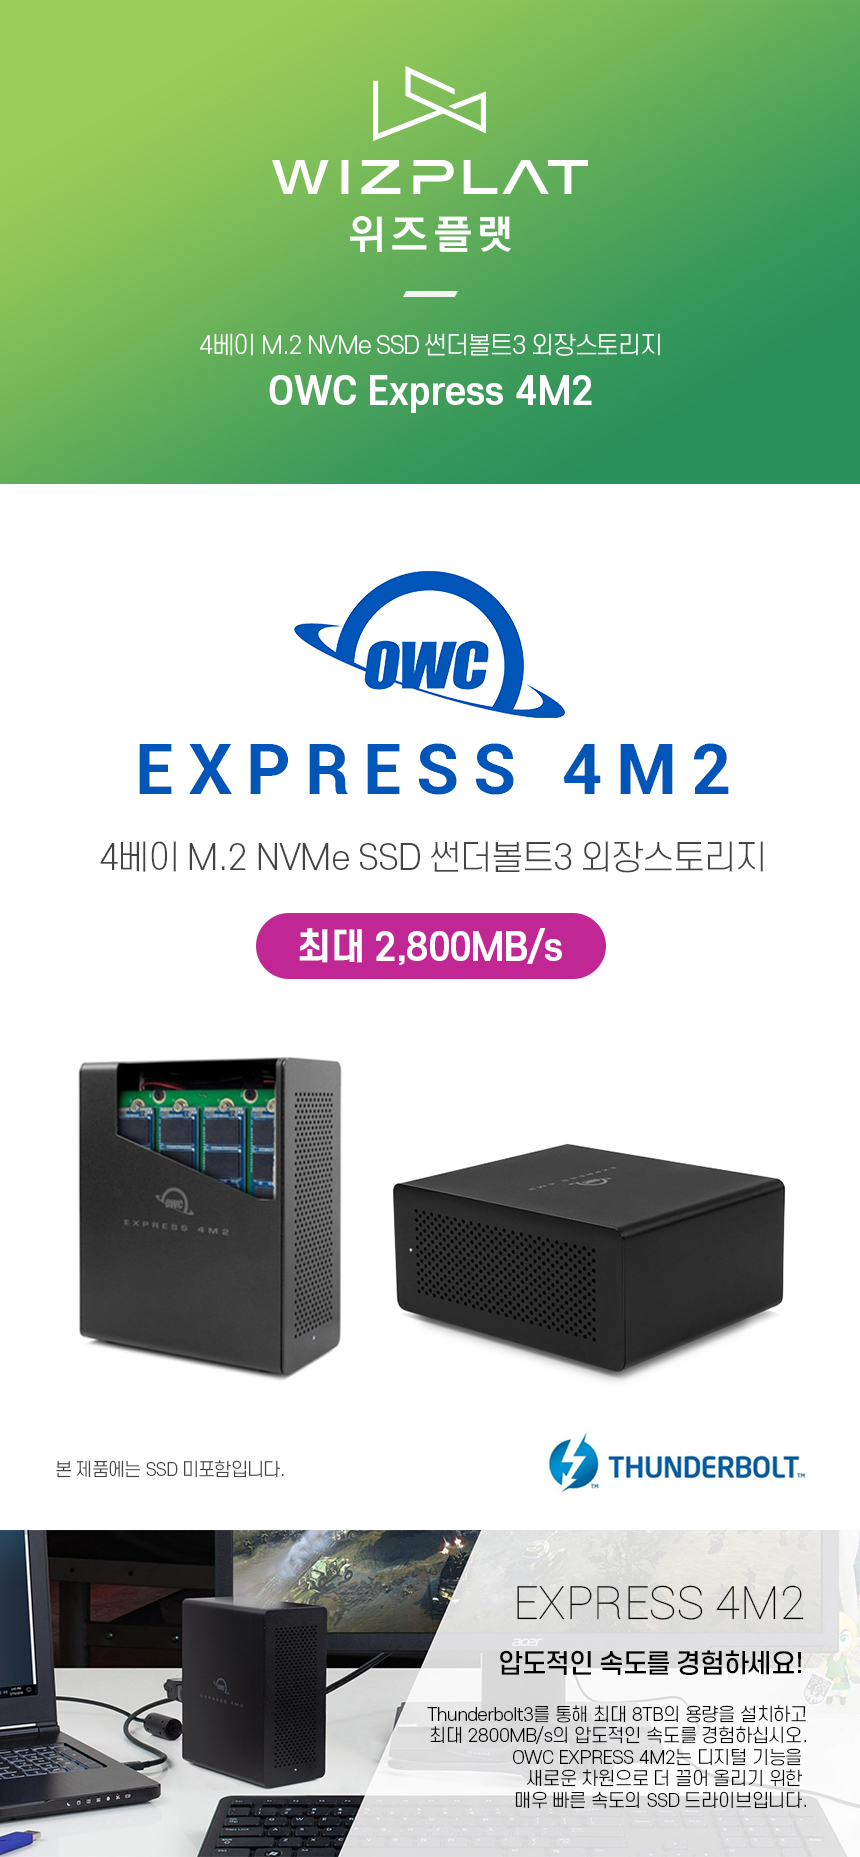 OWC Express 4M2 : WIZPLAT